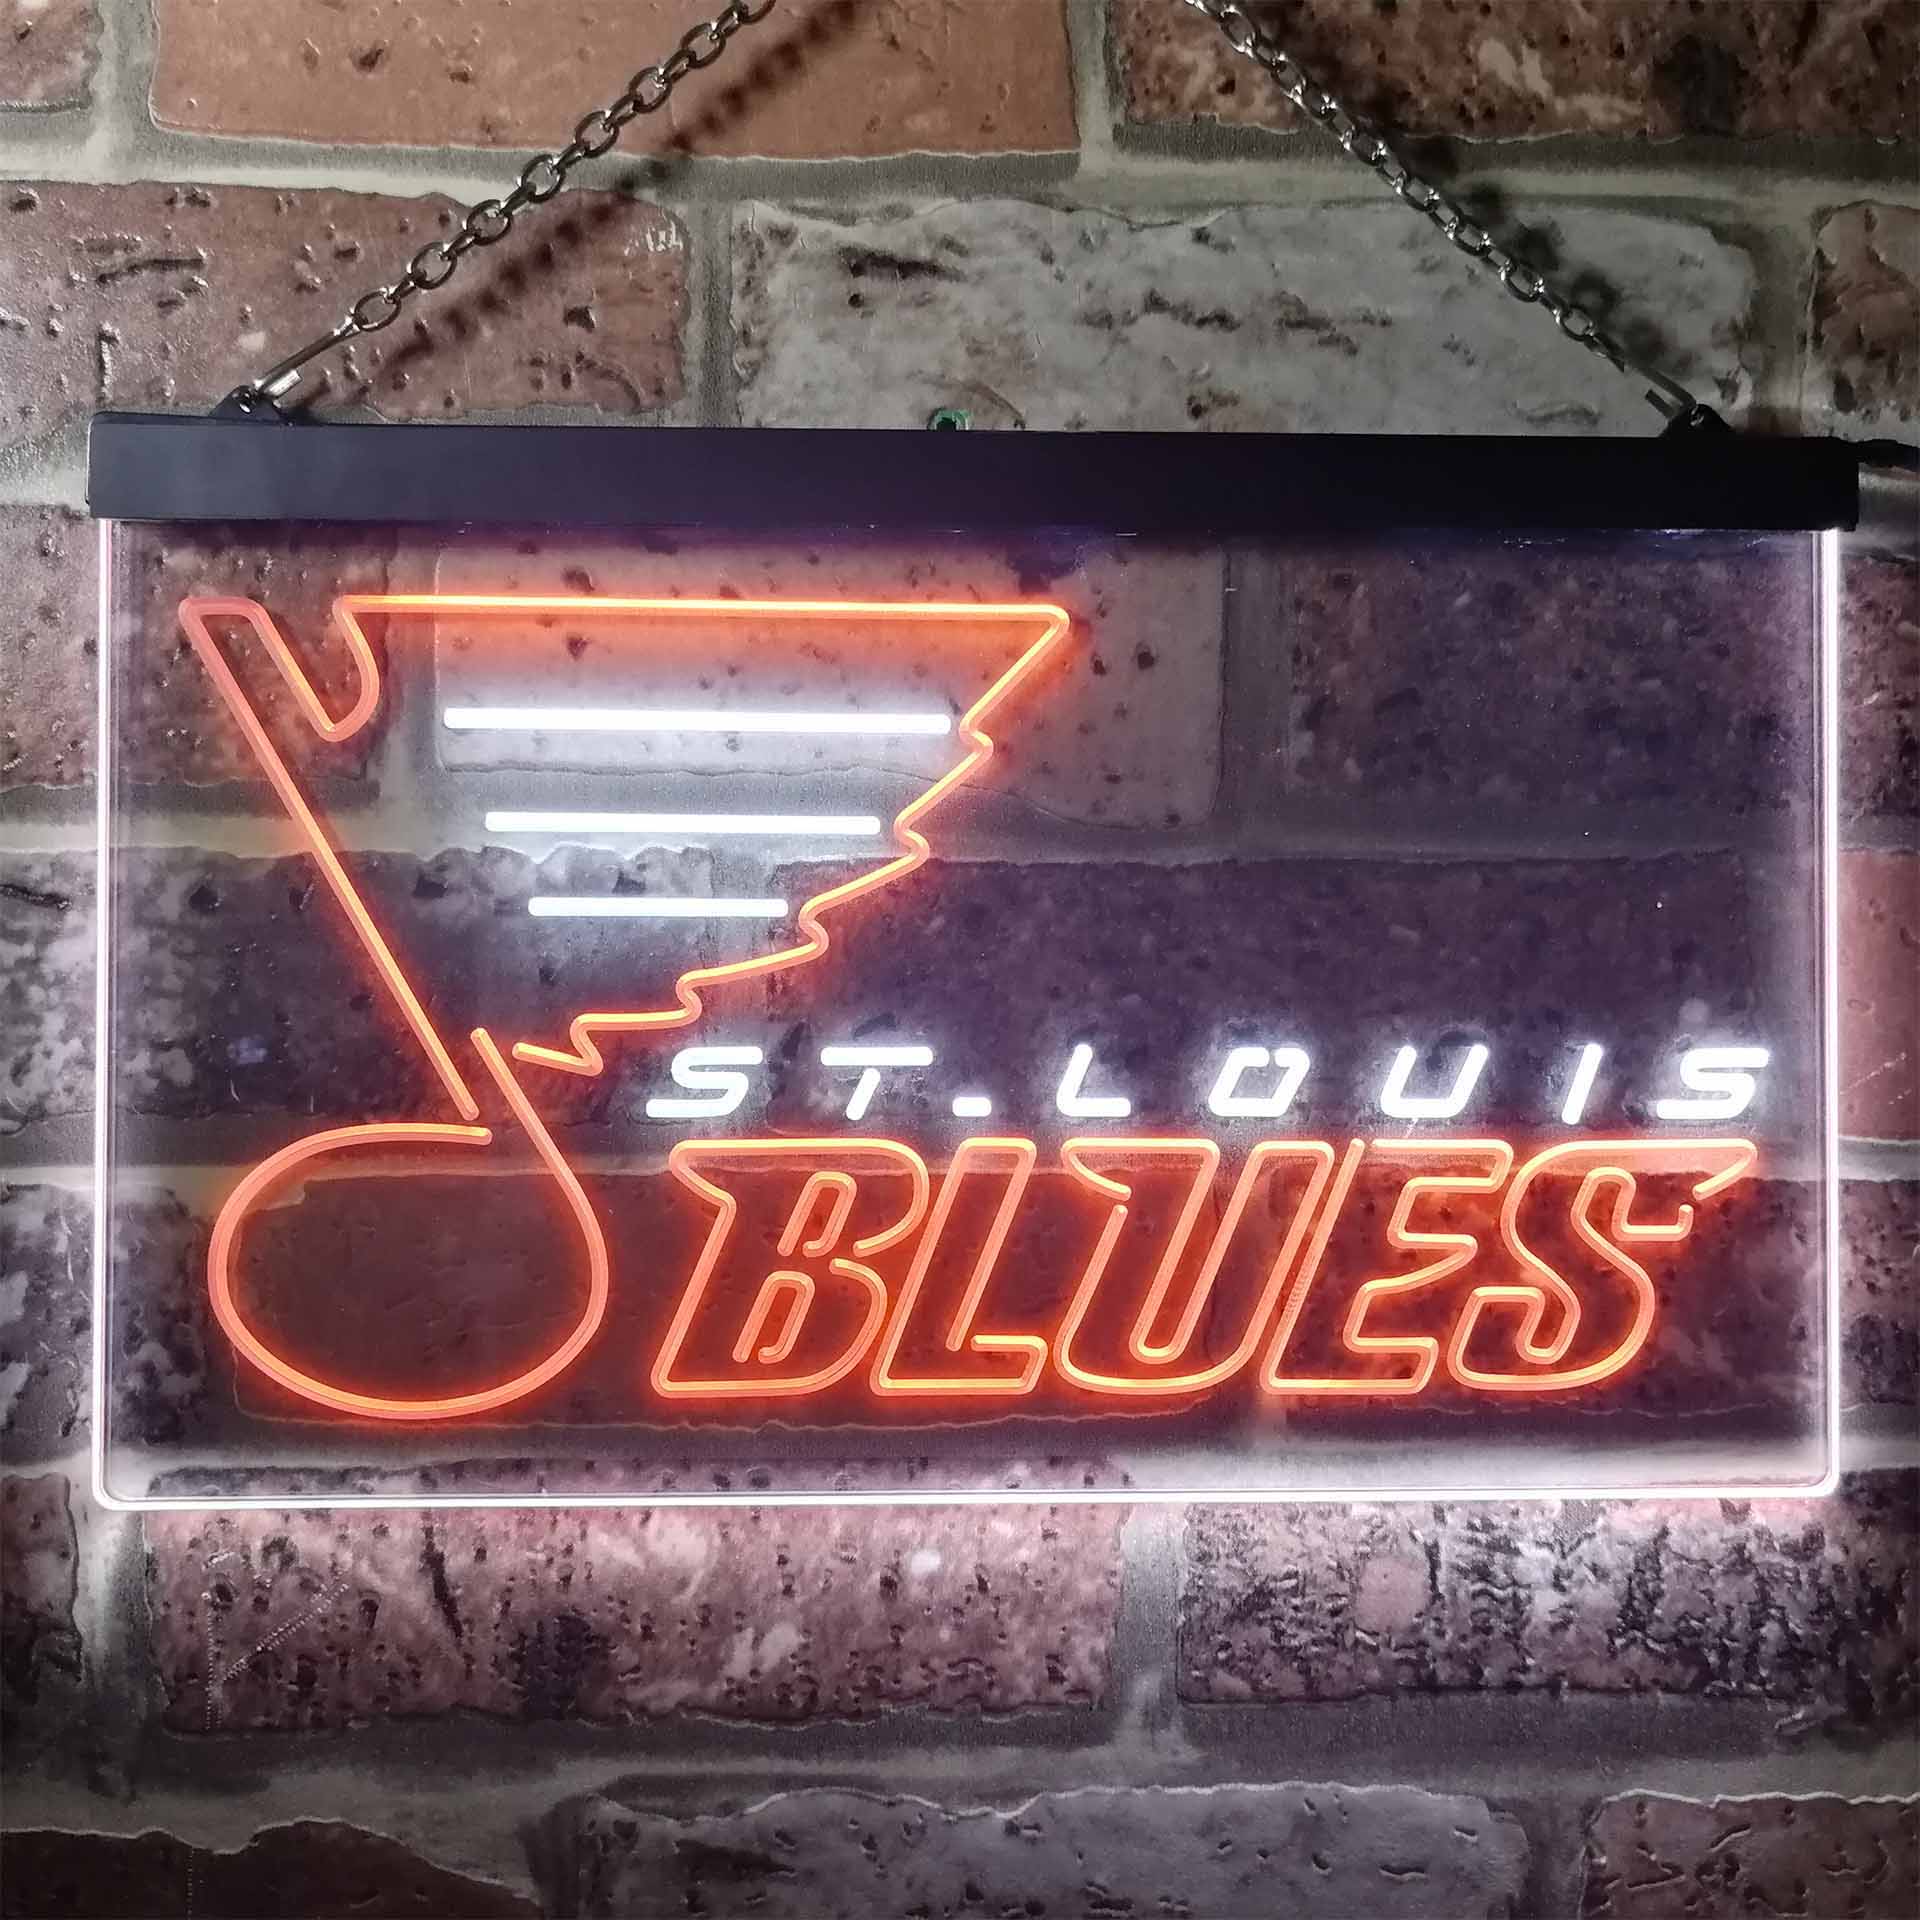 Saint St. Louis Blues 20"x16" Neon Light Lamp Sign With